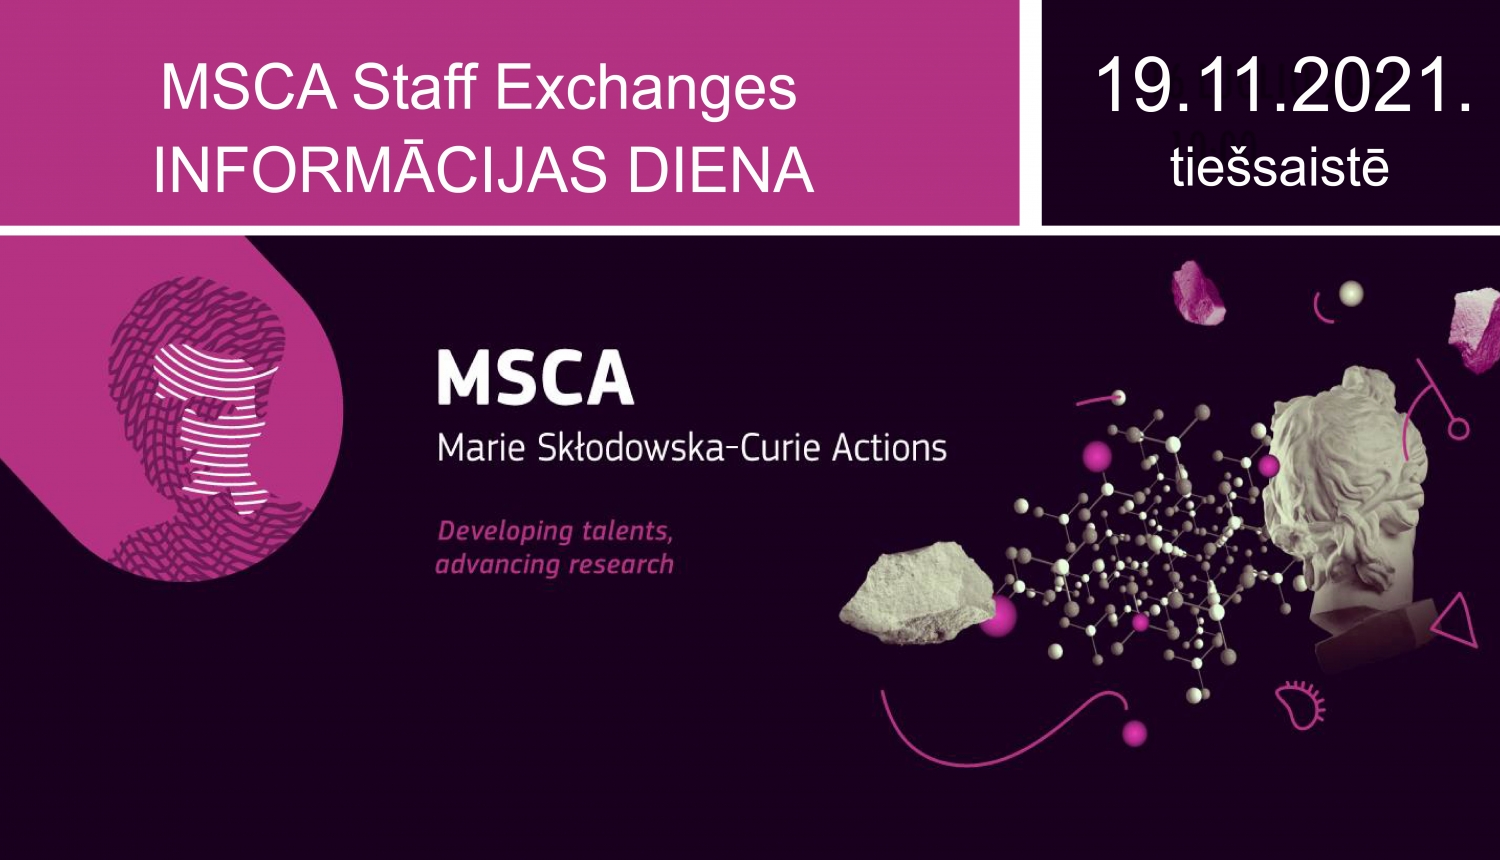 MSCA Exchange informacijas diena